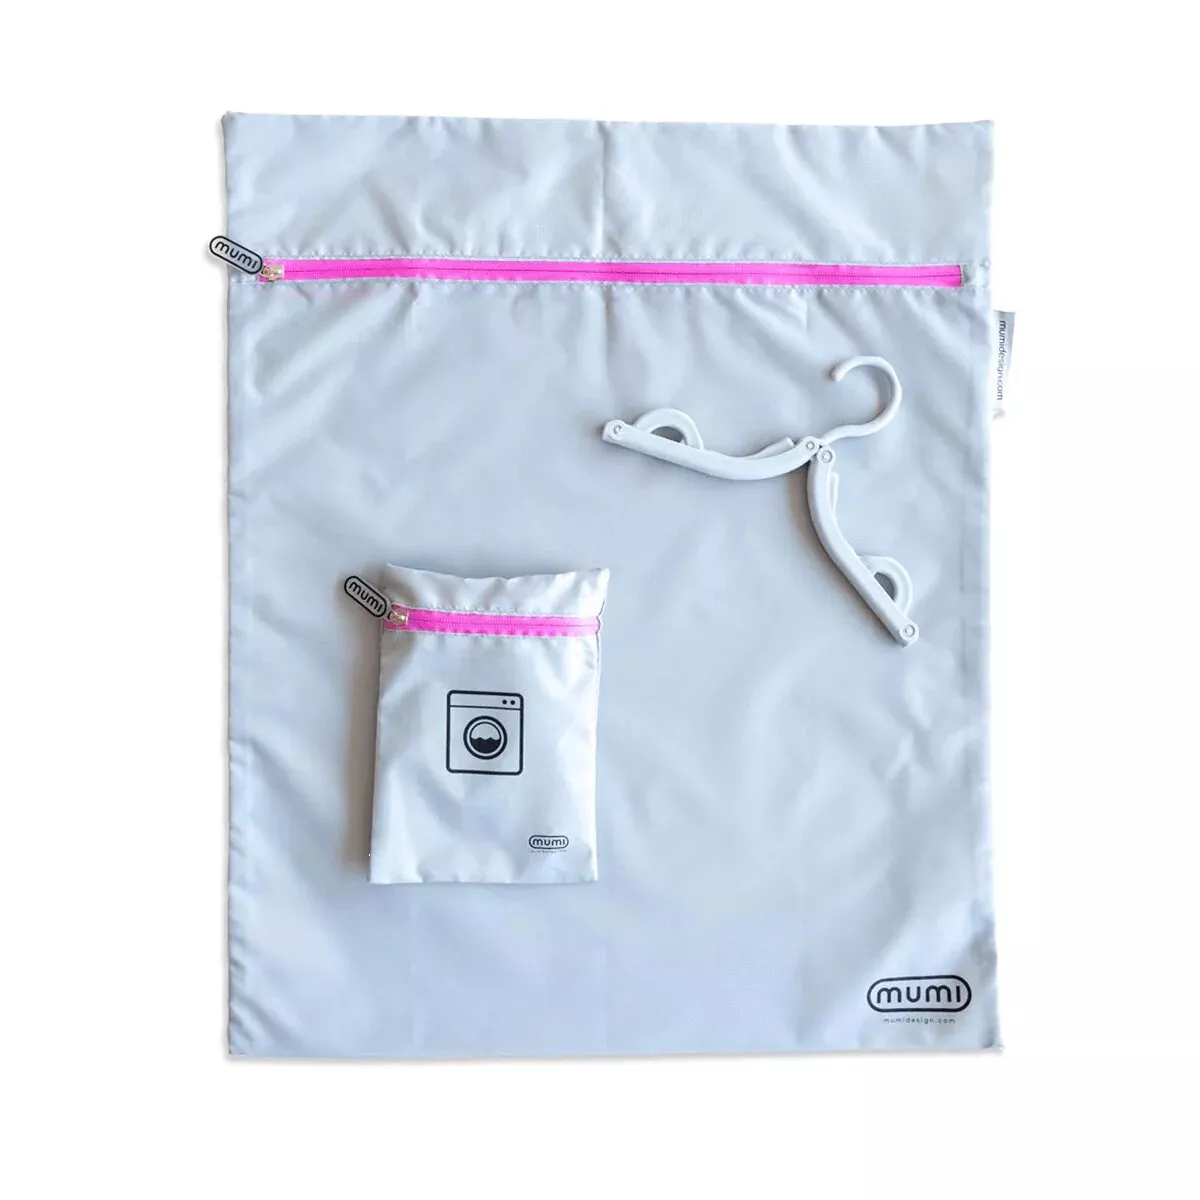 Mumi Design Laundry Bag